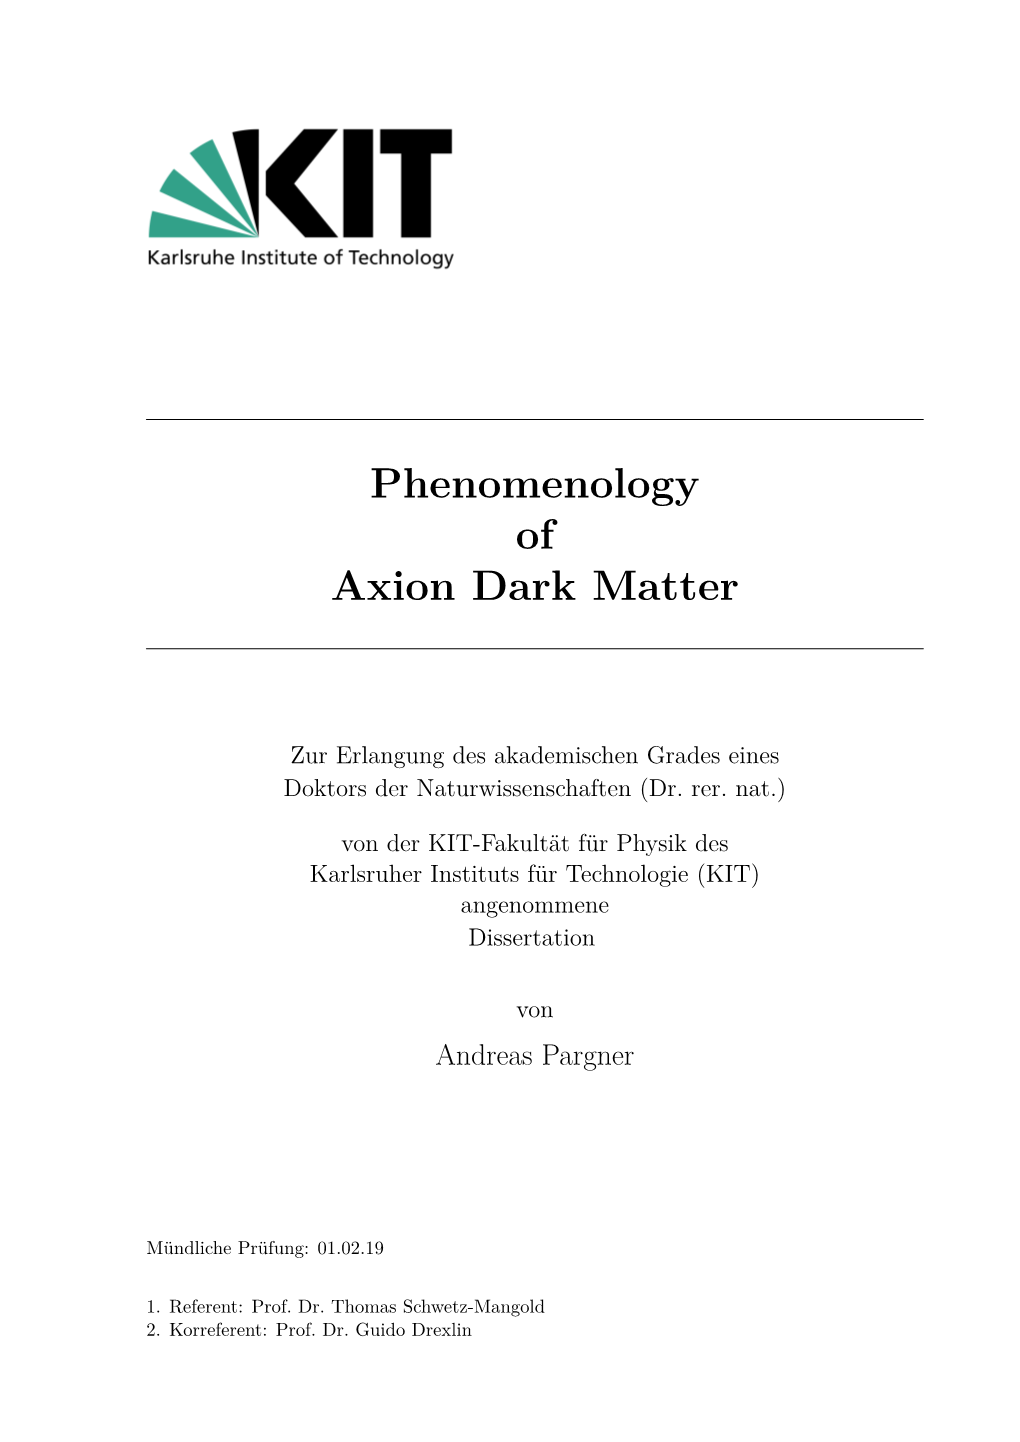 Phenomenology of Axion Dark Matter